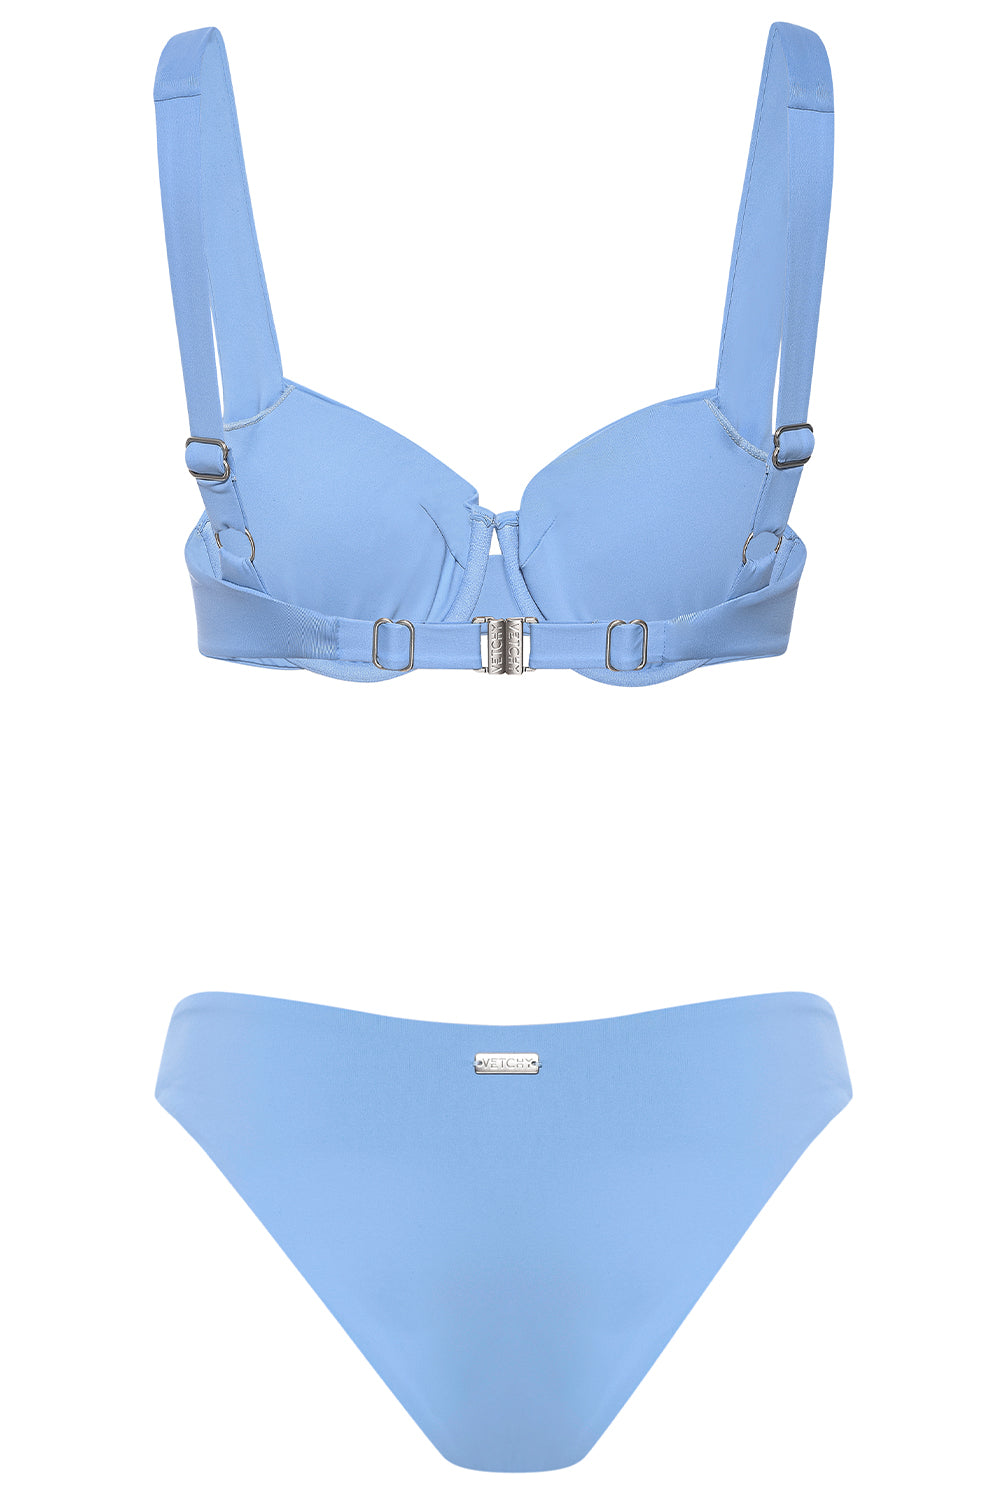 Aruba Bikini Baby Blue Set on white background back view.